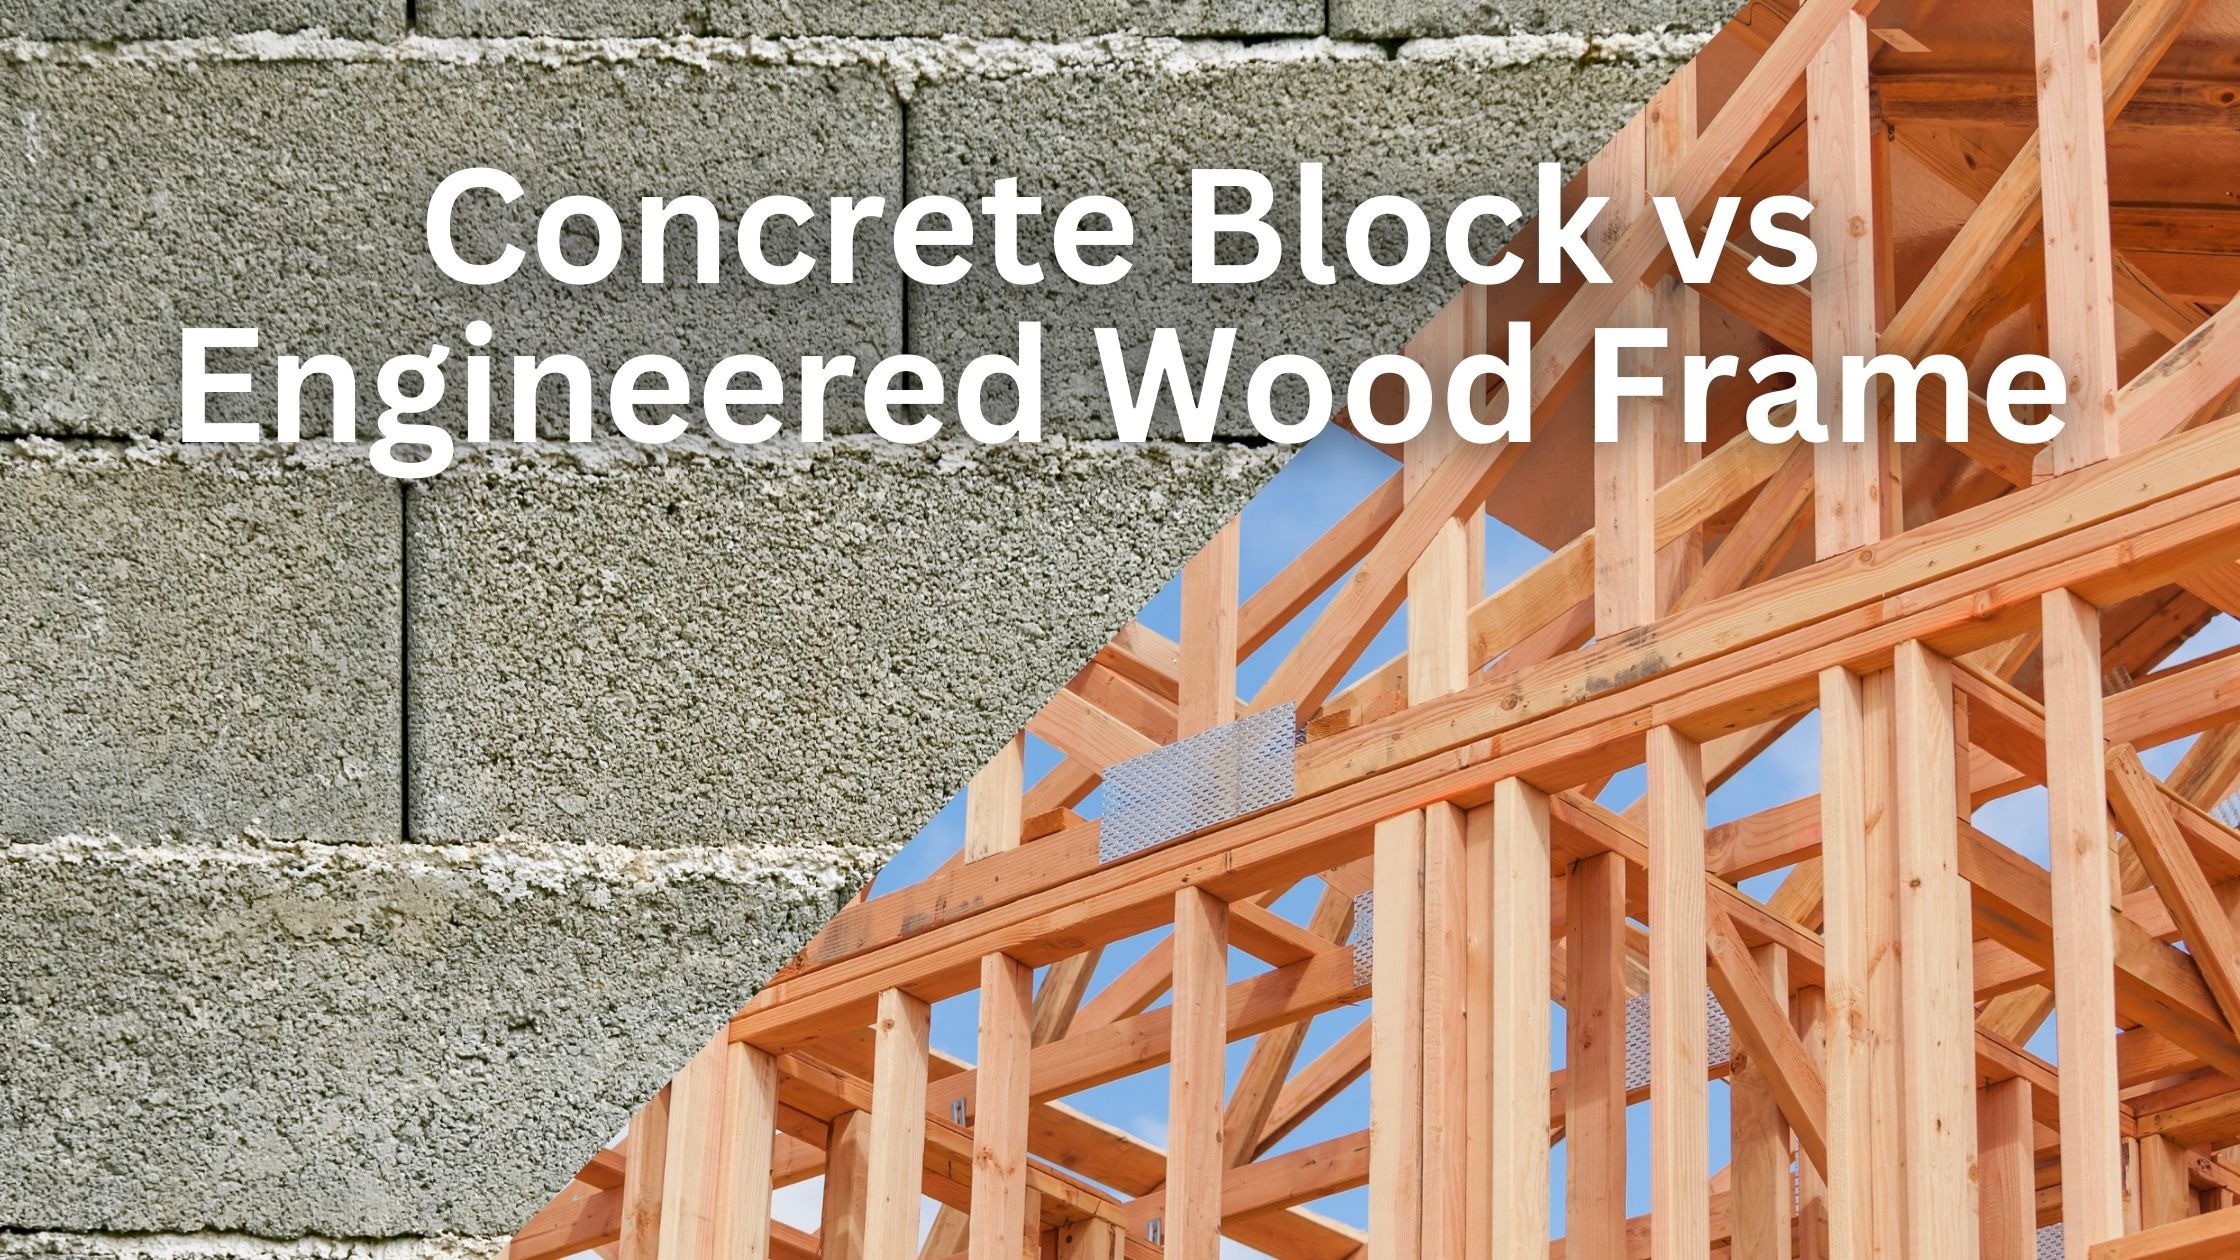 Concrete Block vs Engineered Wood Frame - Concrete Block vs Engineered Wood Frame